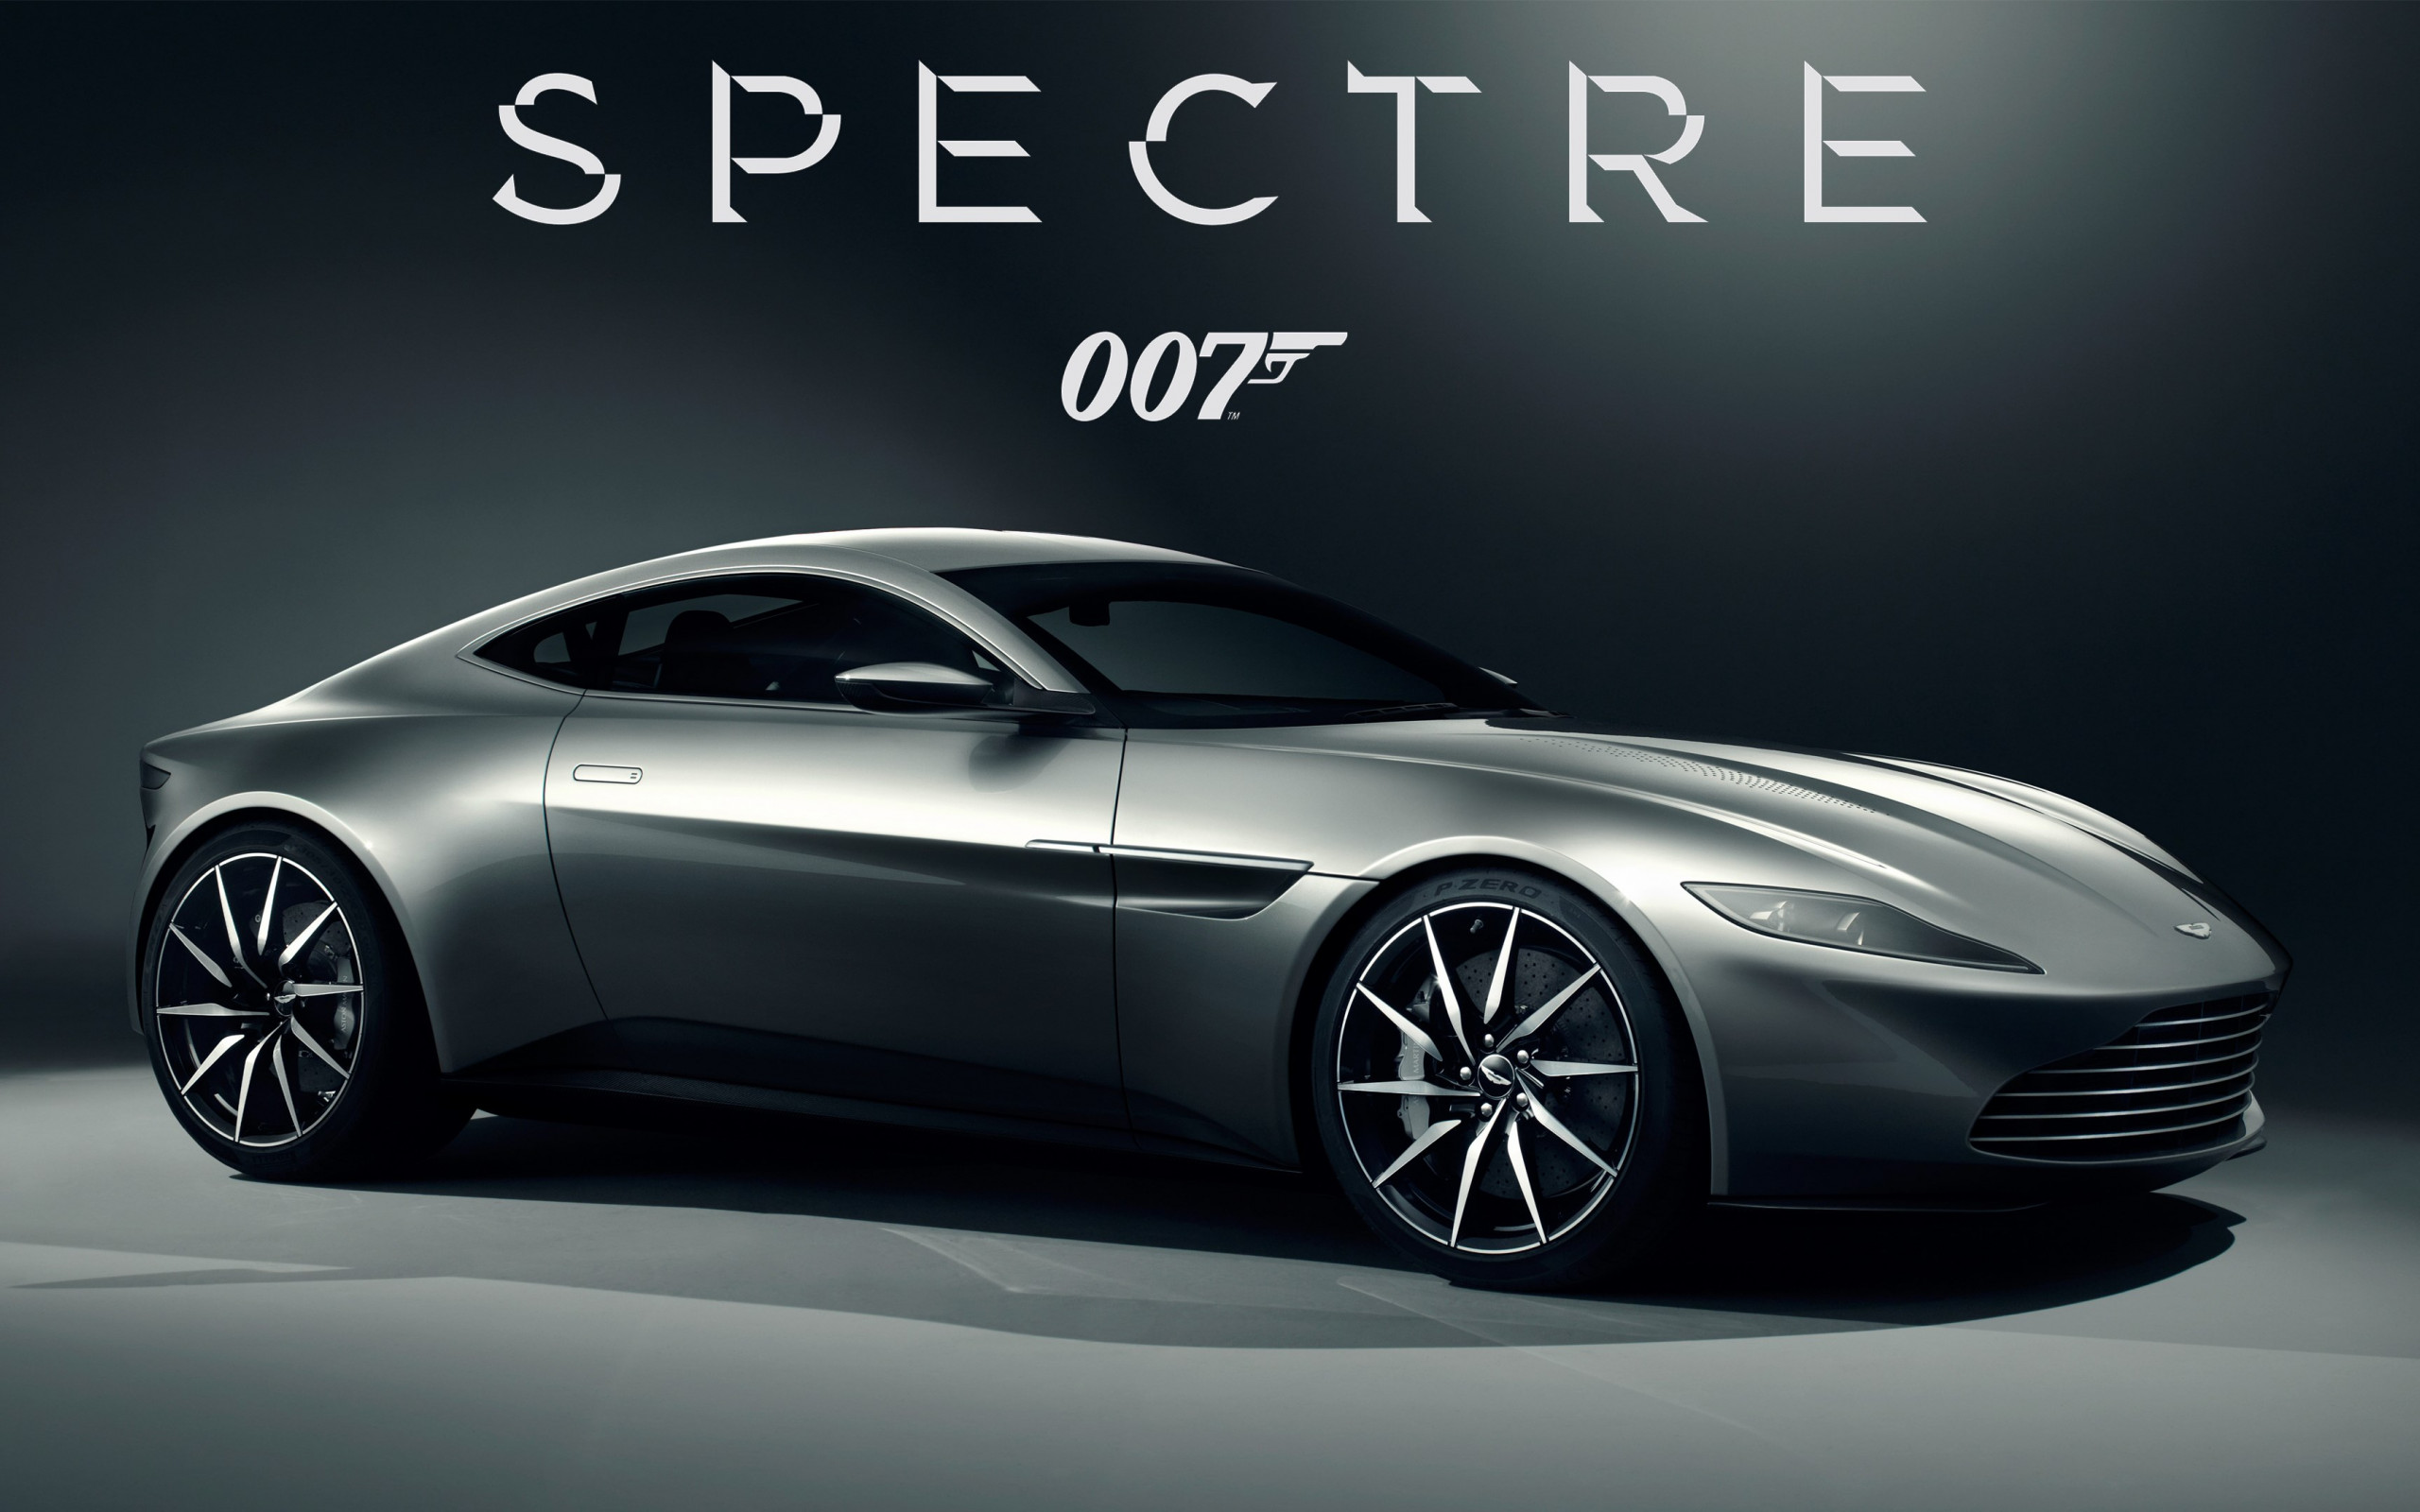 Aston Martin DB10 007 Spectre car wallpaper 2560x1600